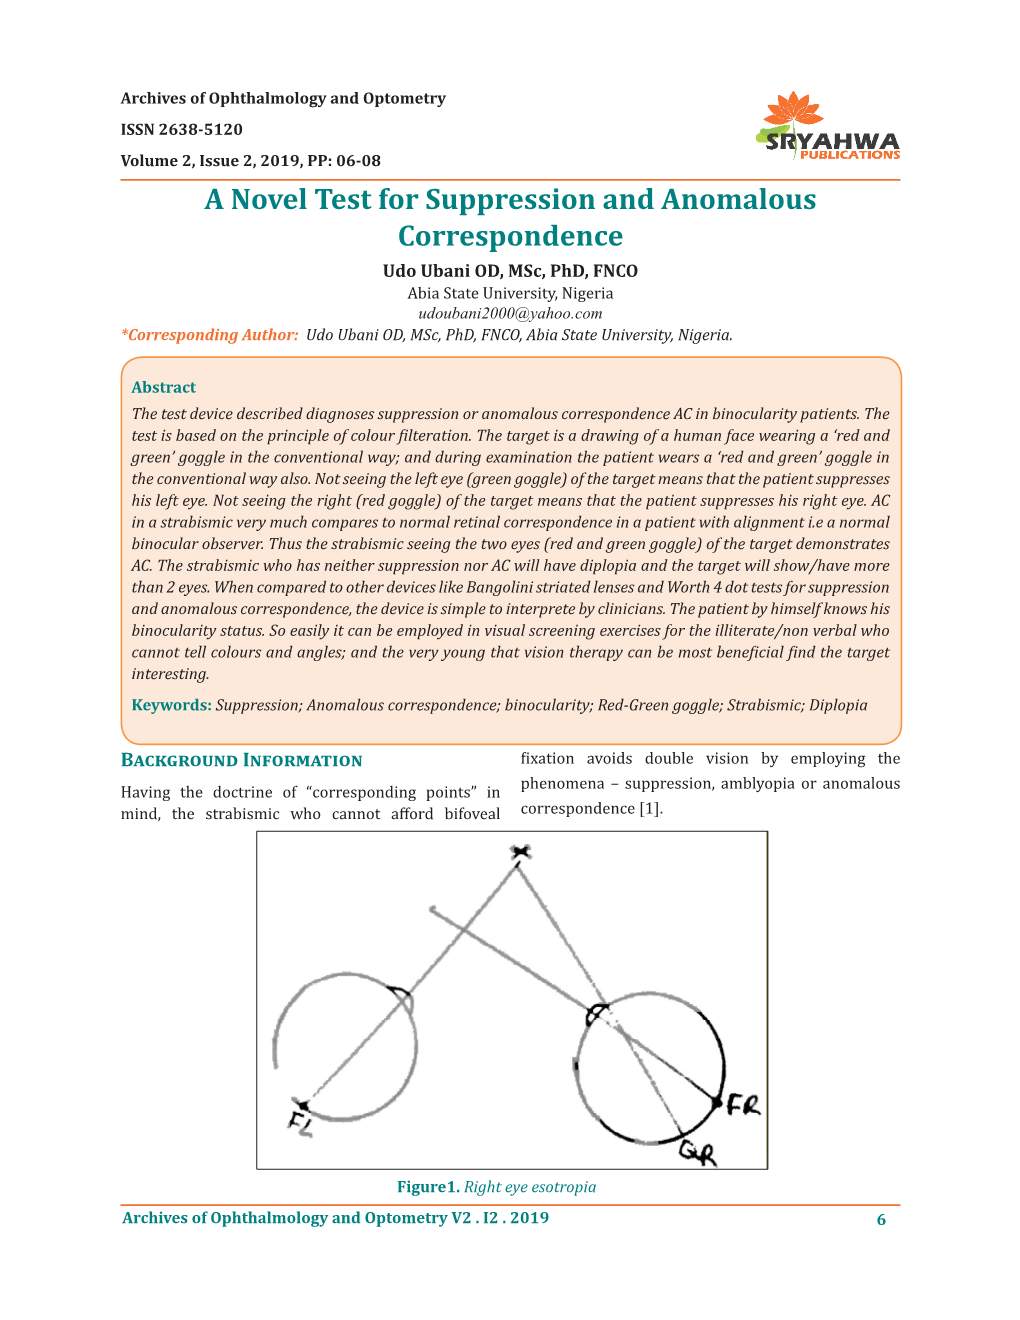 A Novel Test for Suppression and Anomalous Correspondence Udo Ubani OD, Msc, Phd, FNCO